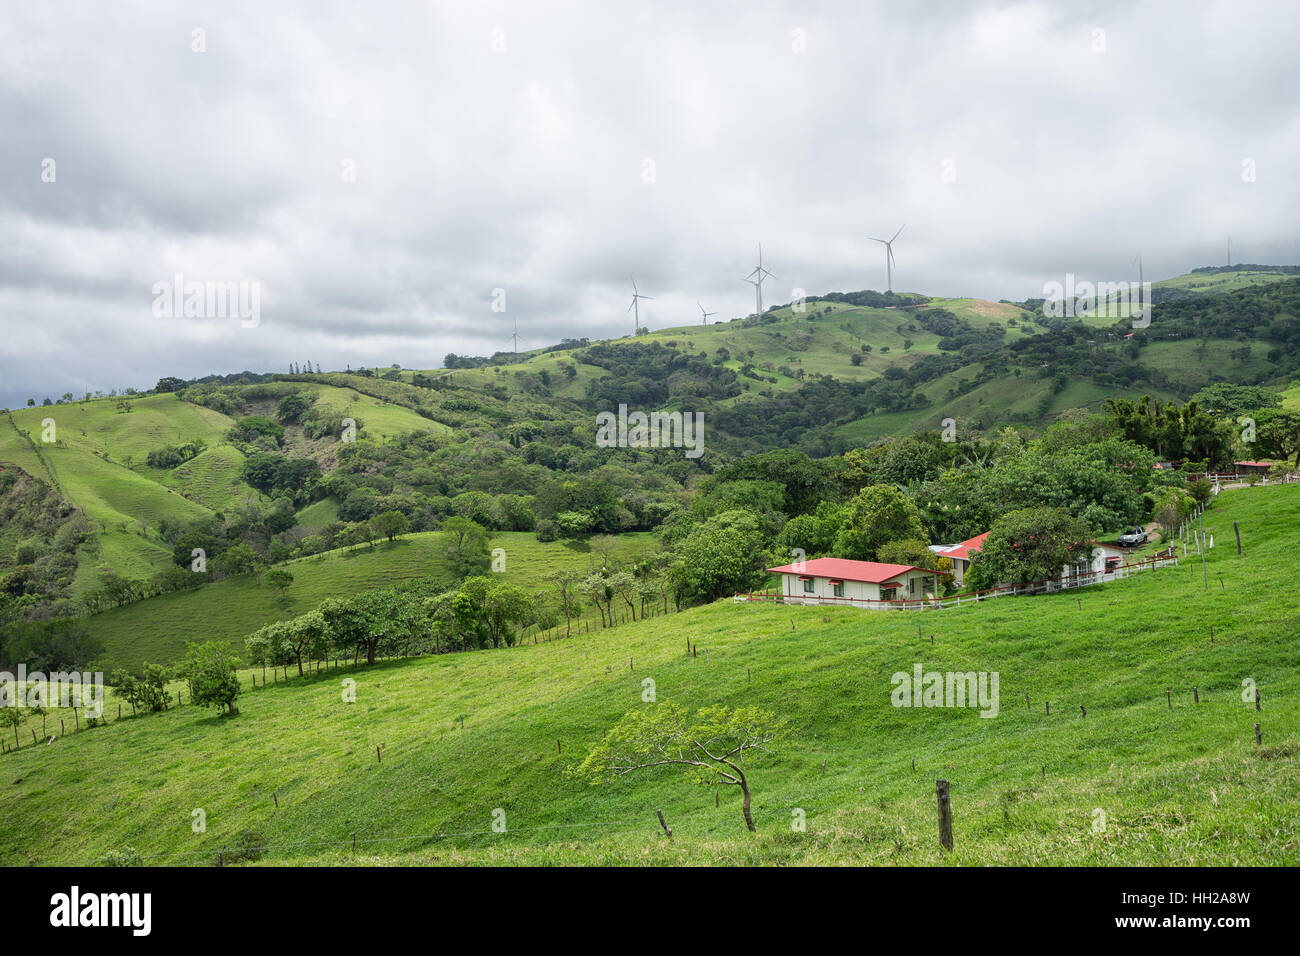 May 20, 2016 Tilaran, Costa Rica: small farm house in the lush green highlands Stock Photo